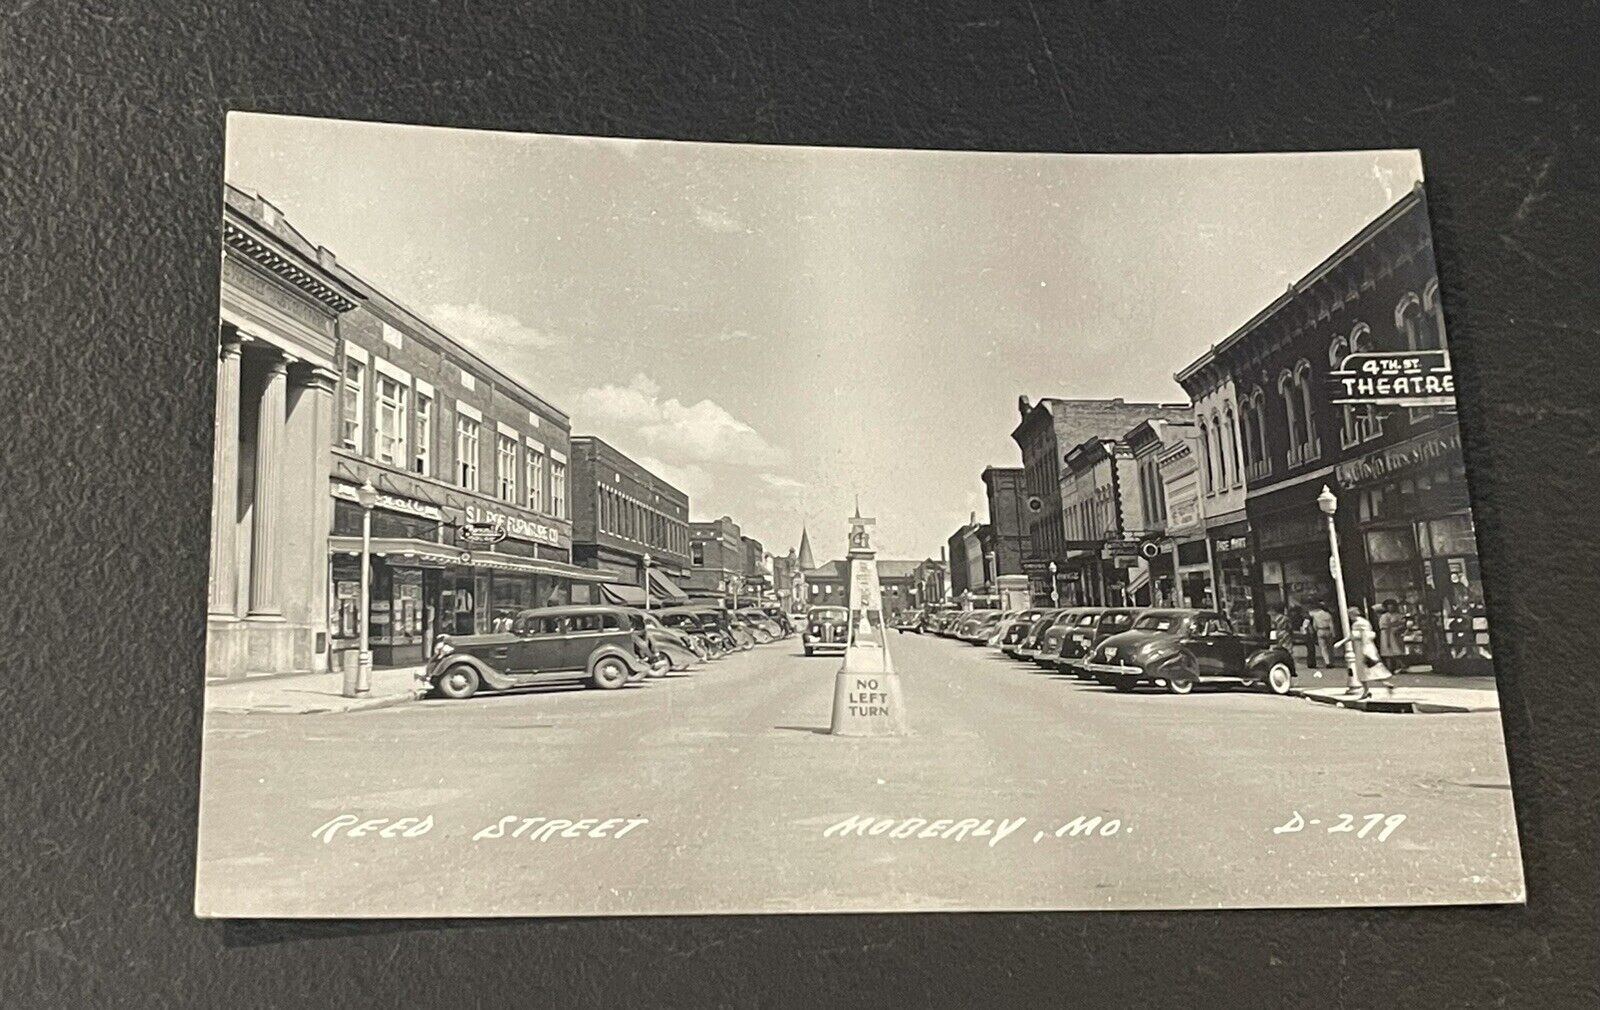 ORIGINAL 1948 Moberly, Missouri RPPC Real Photo Postcard - Reed Street